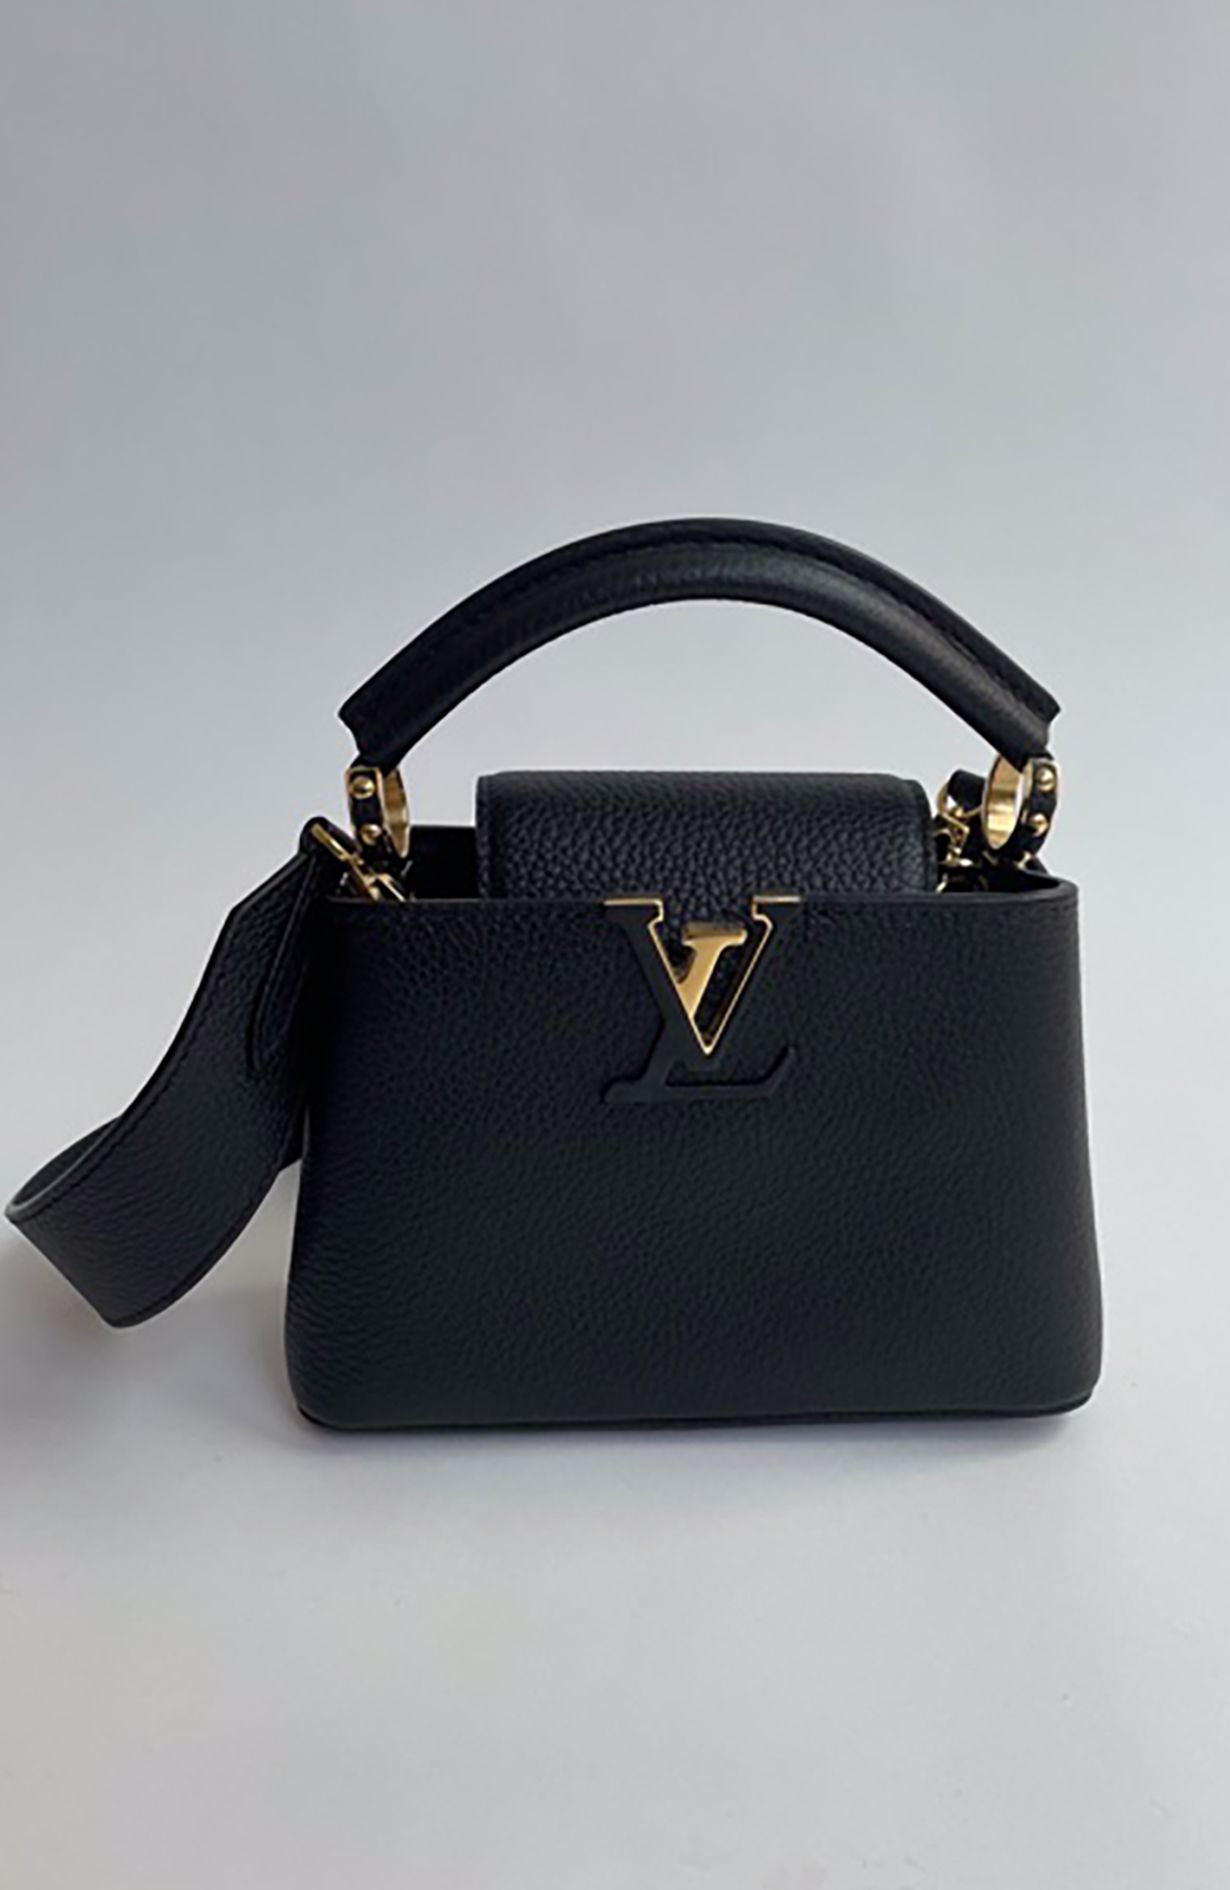 LOUIS VUITTON Capucines model. Handbag in black grained…